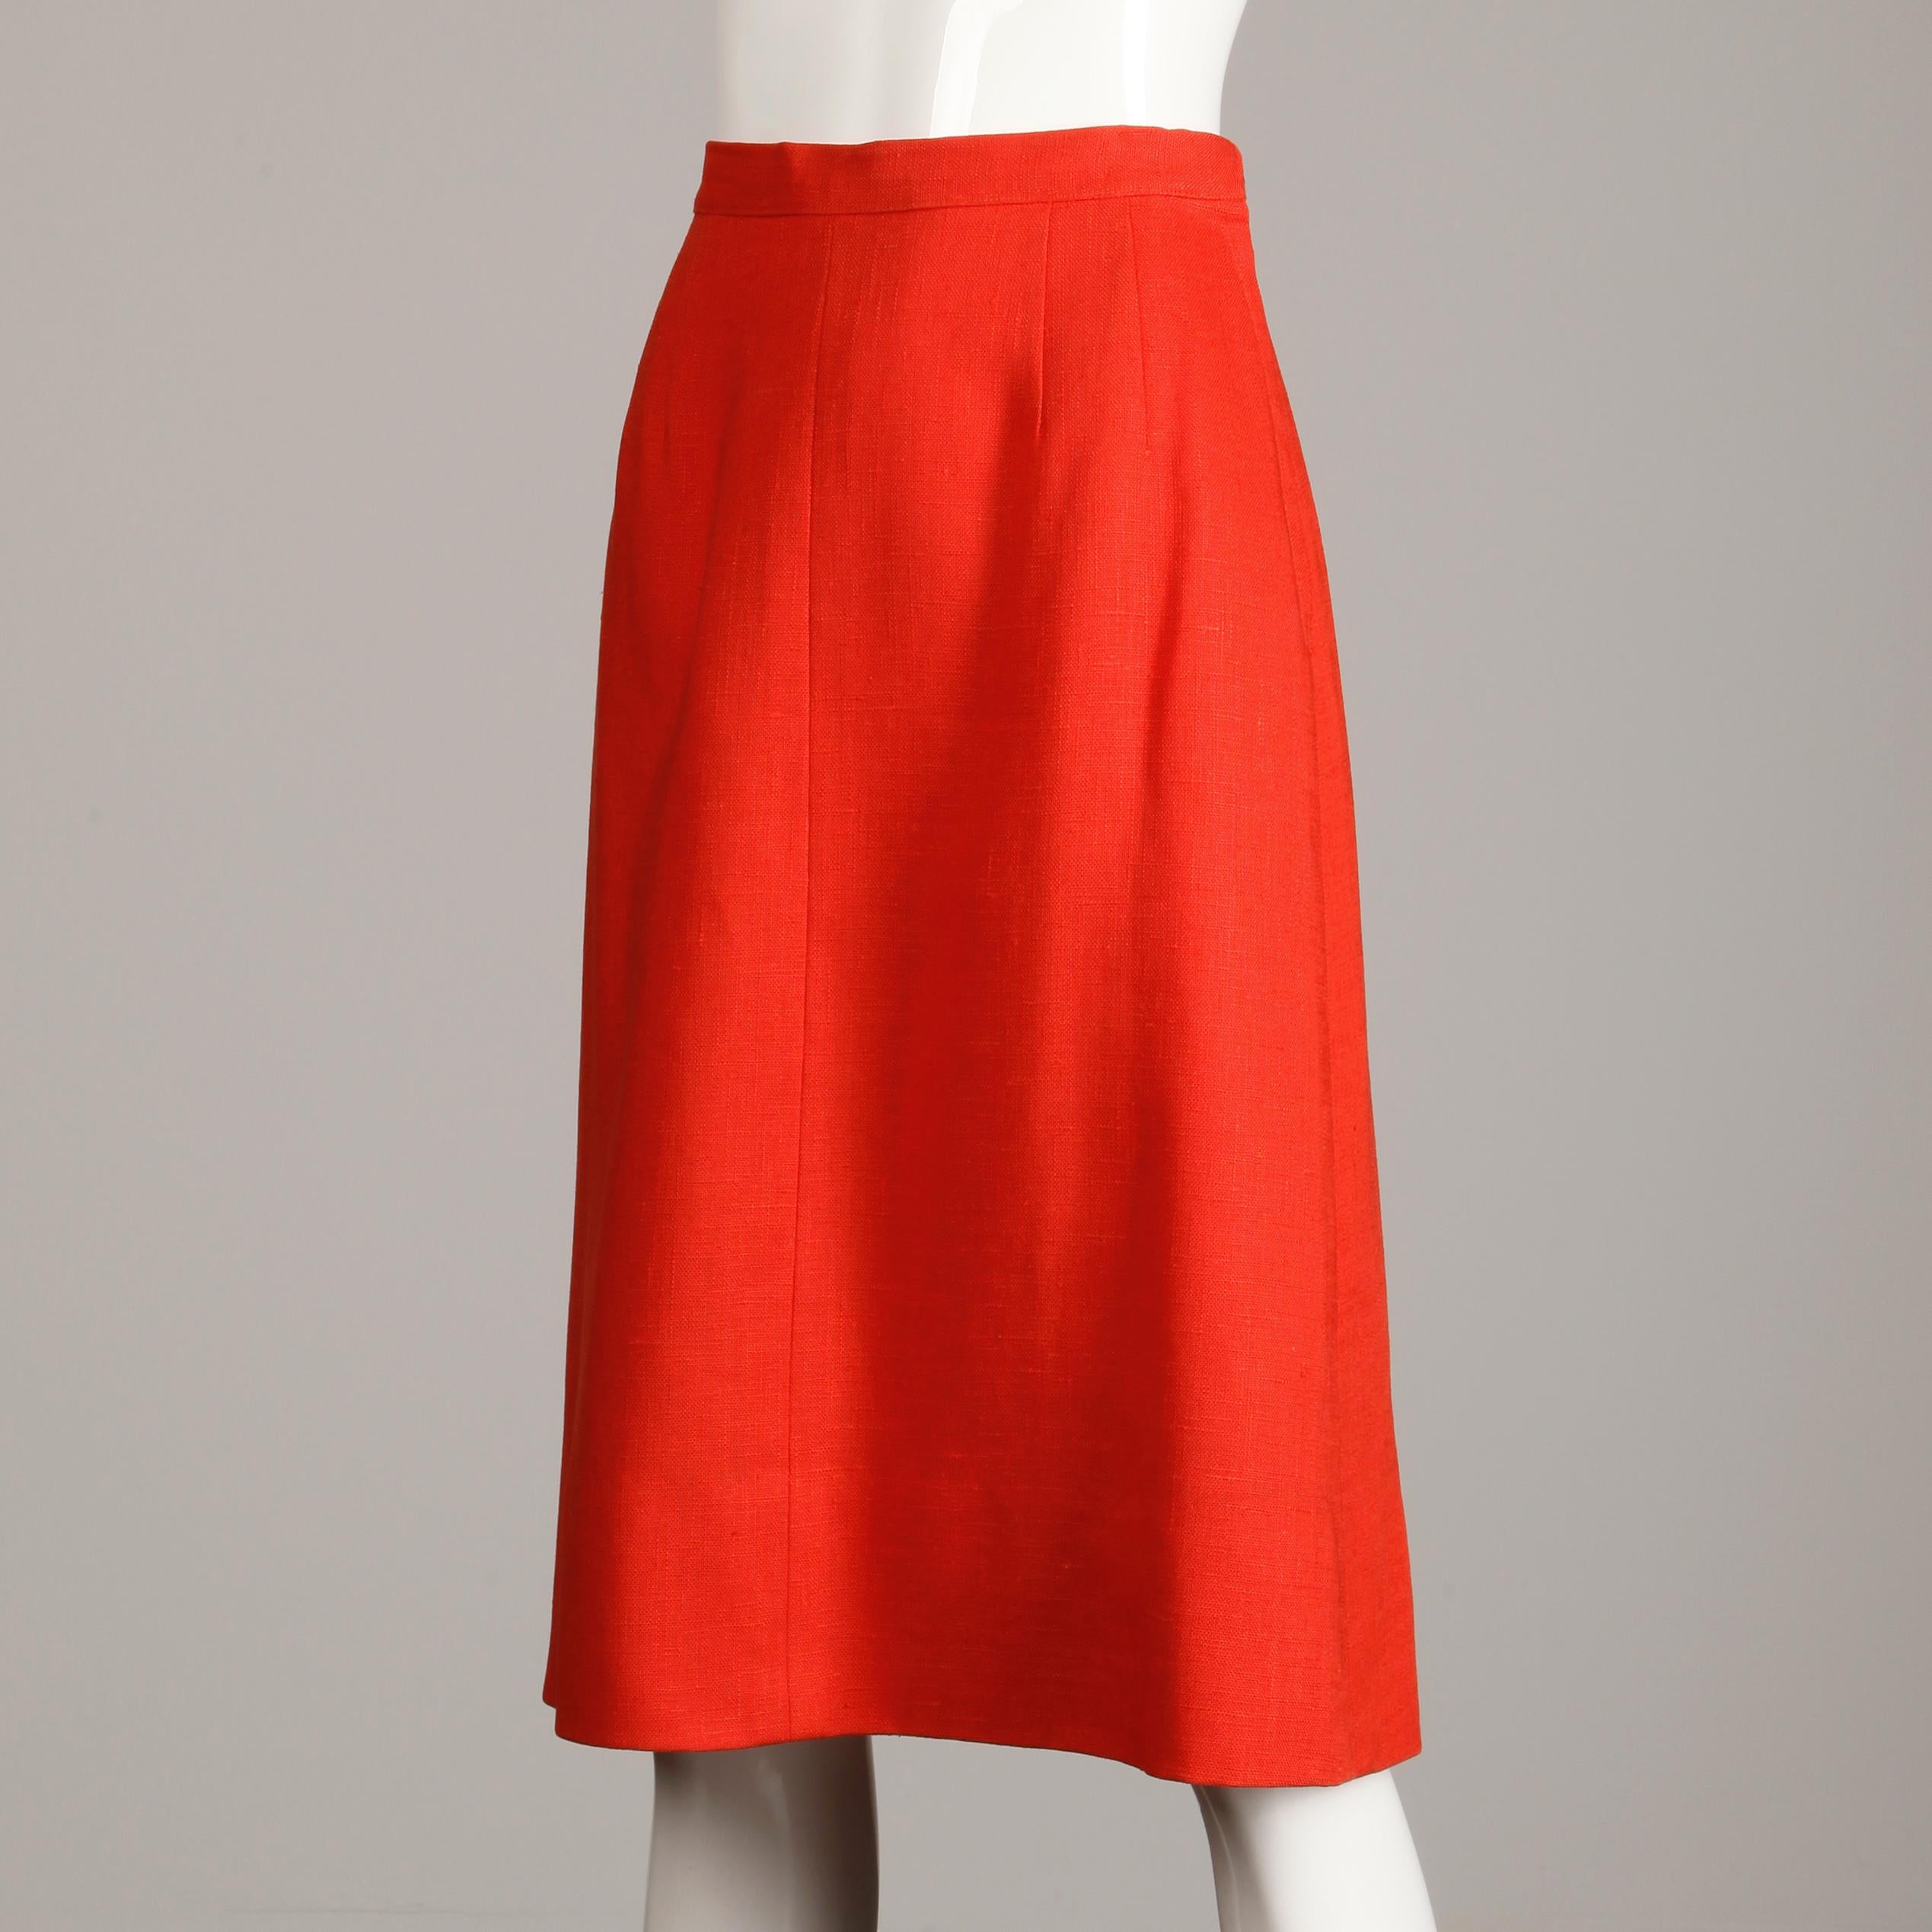 retro pencil skirt